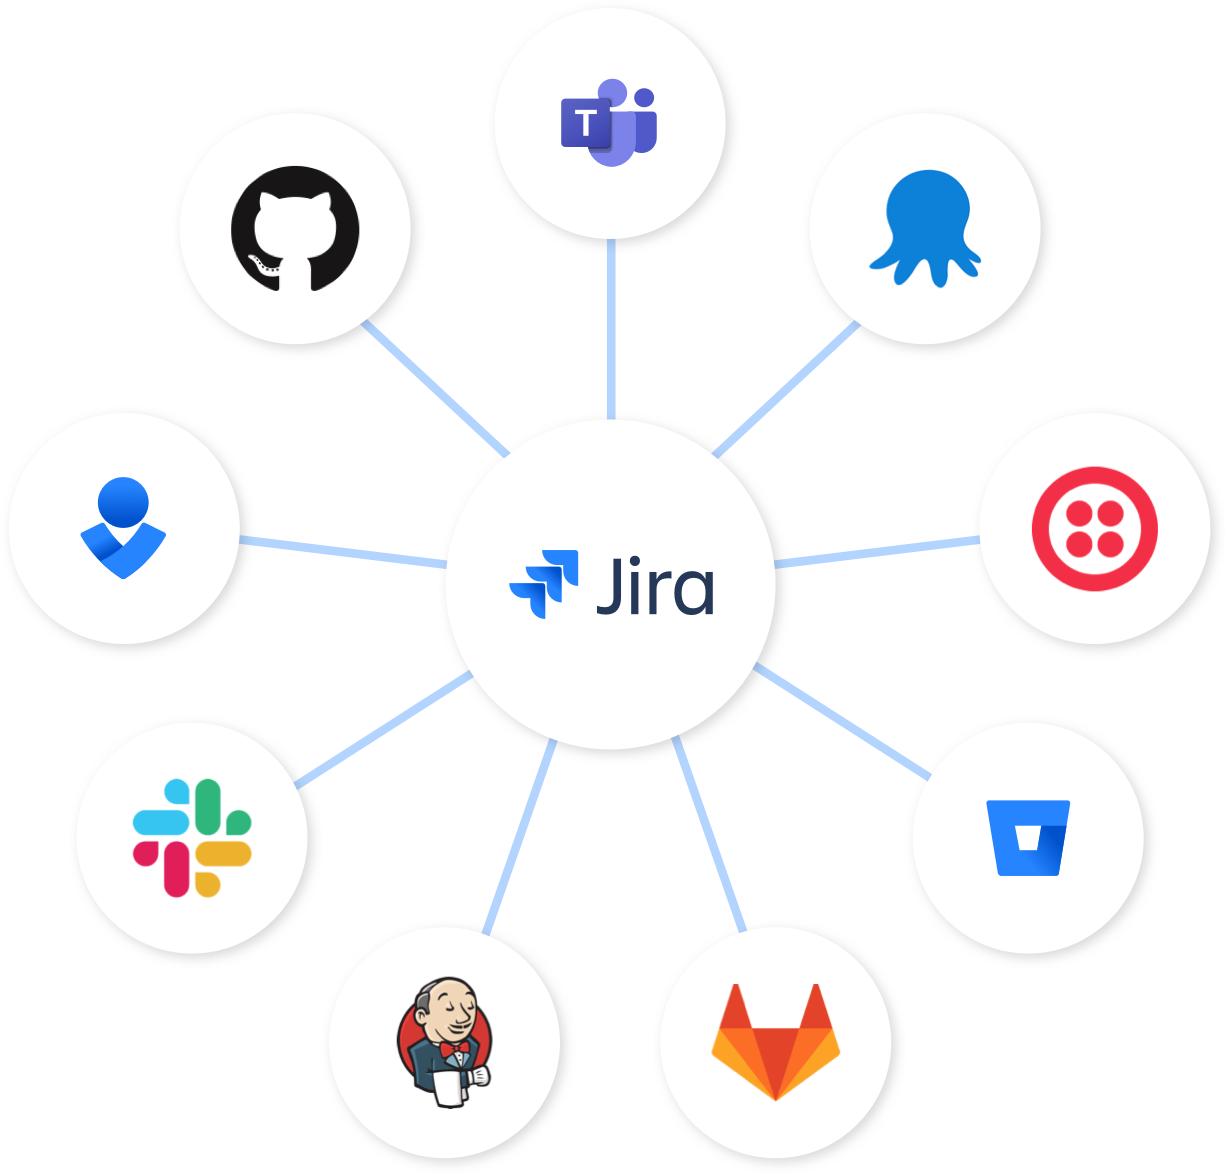 Узел Jira: Jira по центру, а Bitbucket, Slack и Opsgenie присоединены к ней